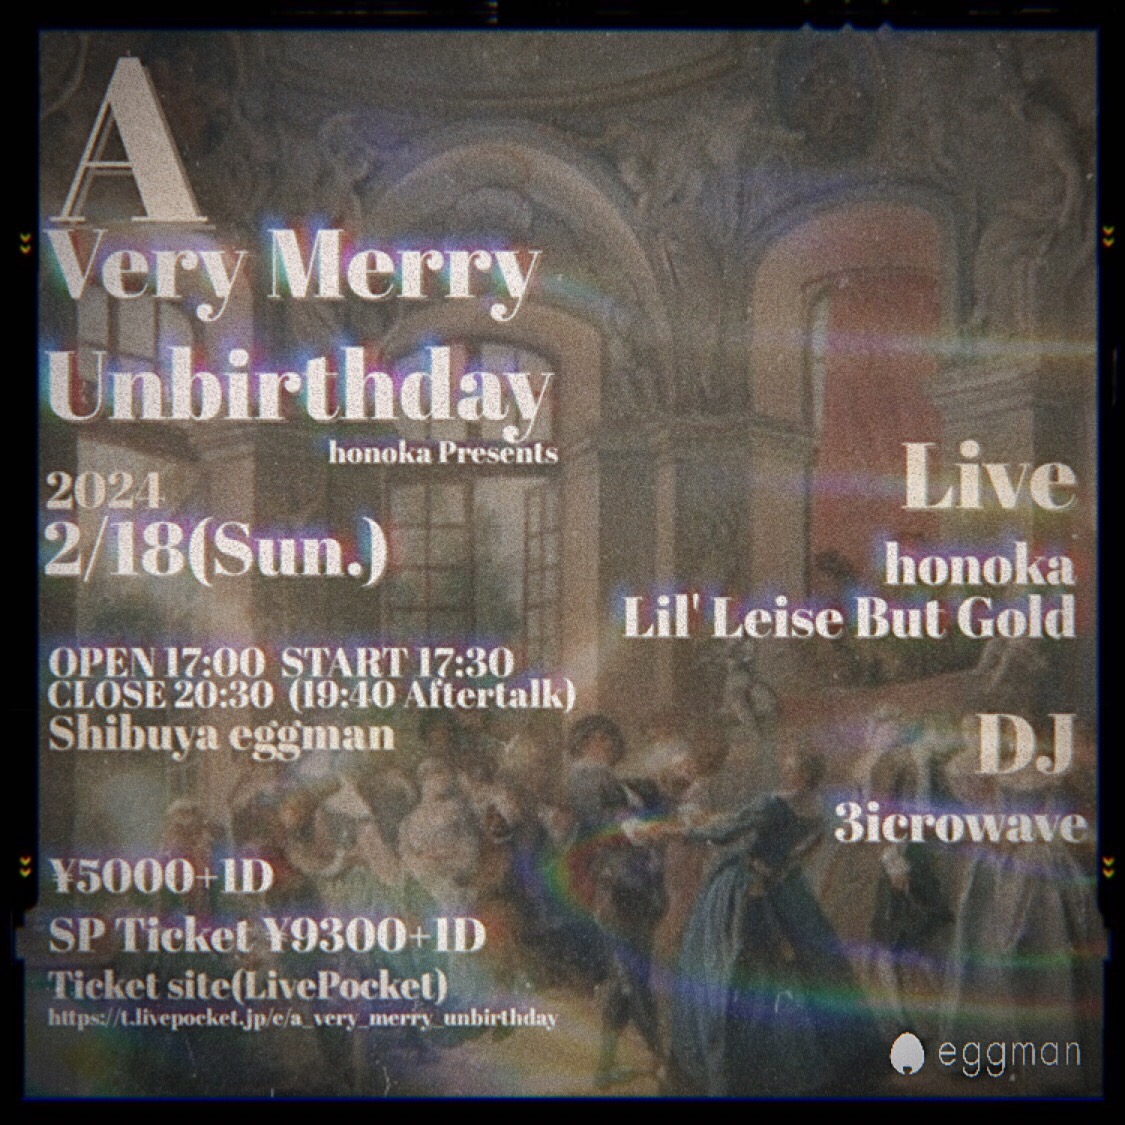 honoka Presents LIVE “A Very Merry Unbirthday”